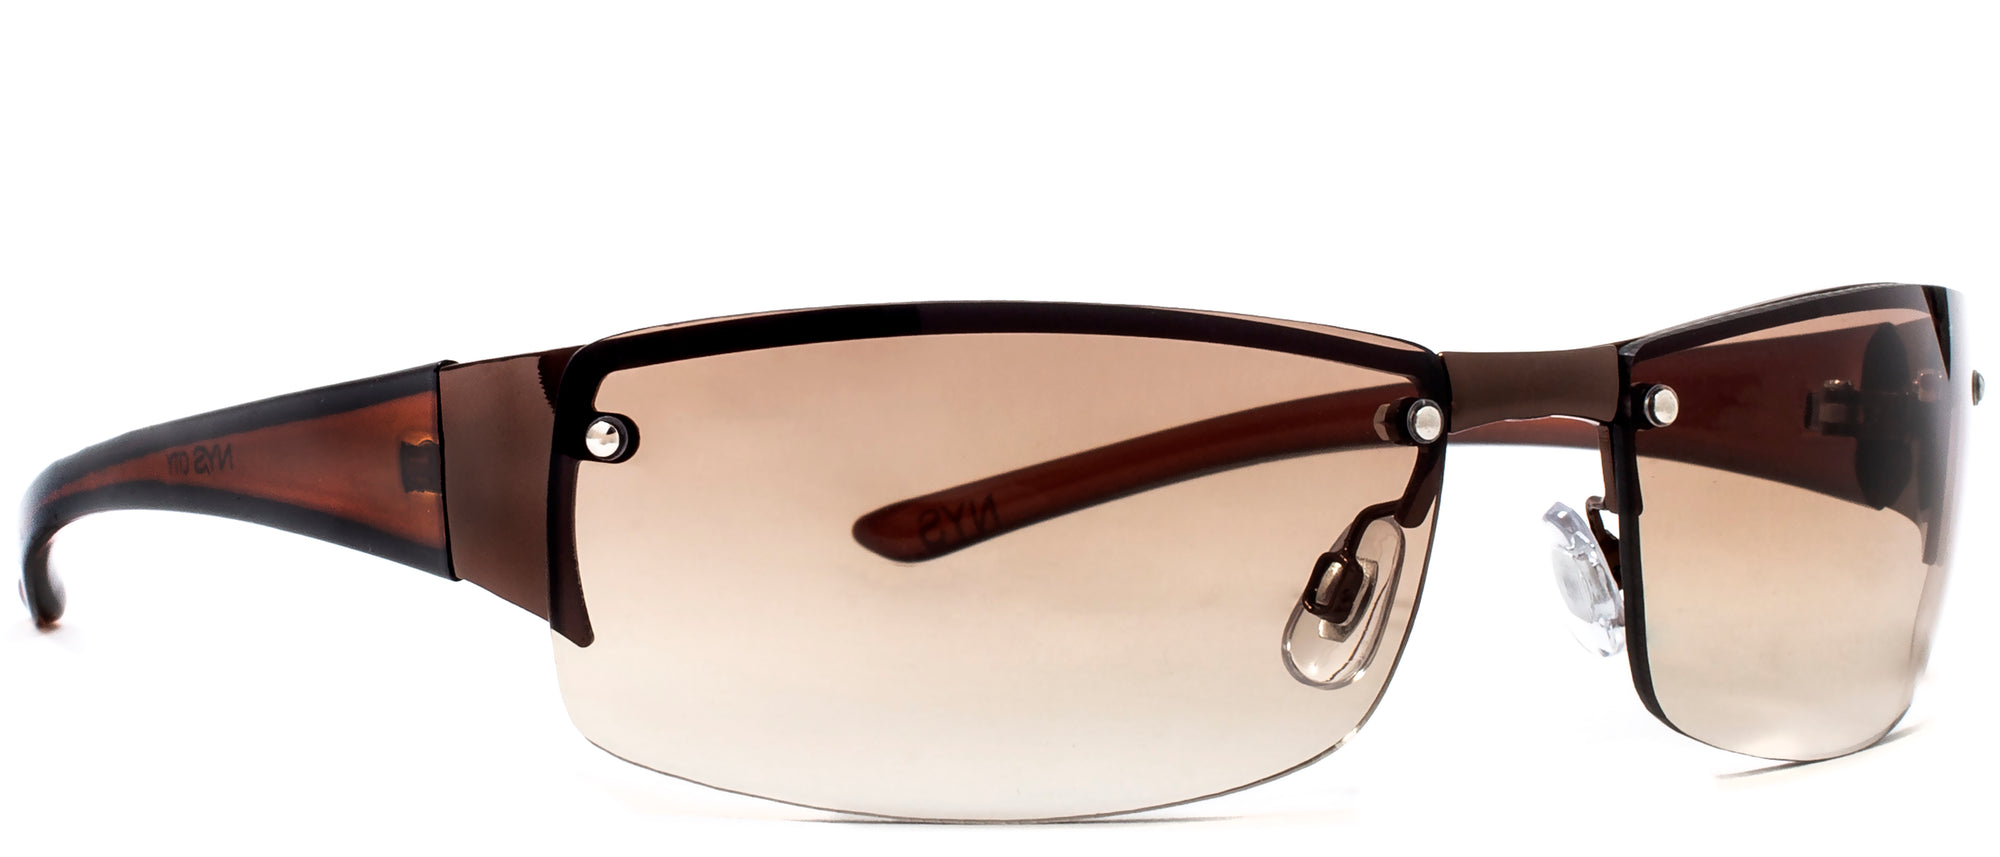 King Street - Sunglasses NYS Collection Eyewear